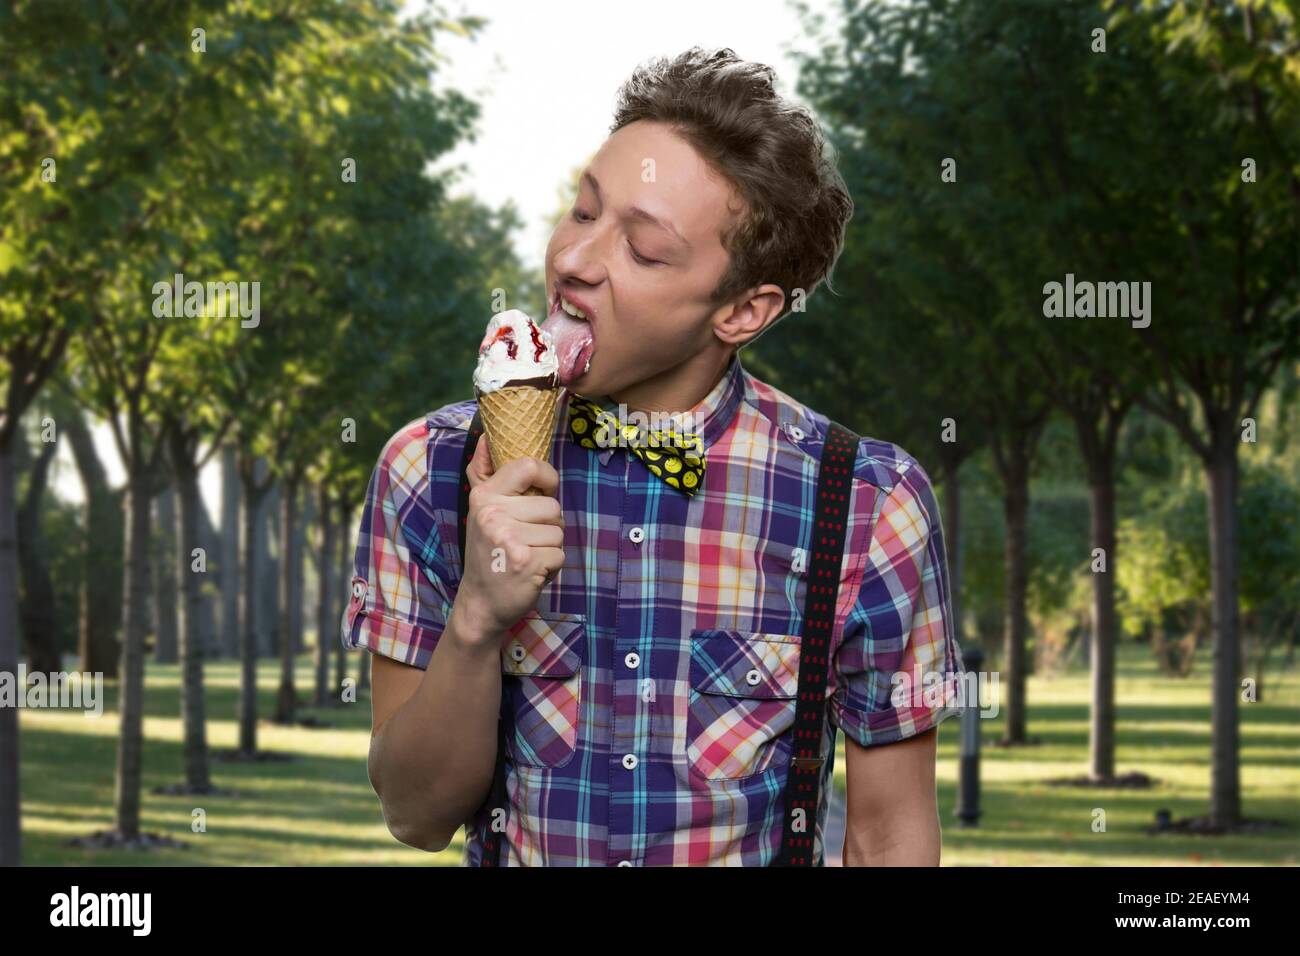 American teen boy in suspenders is licking ice-cream. Stock Photo